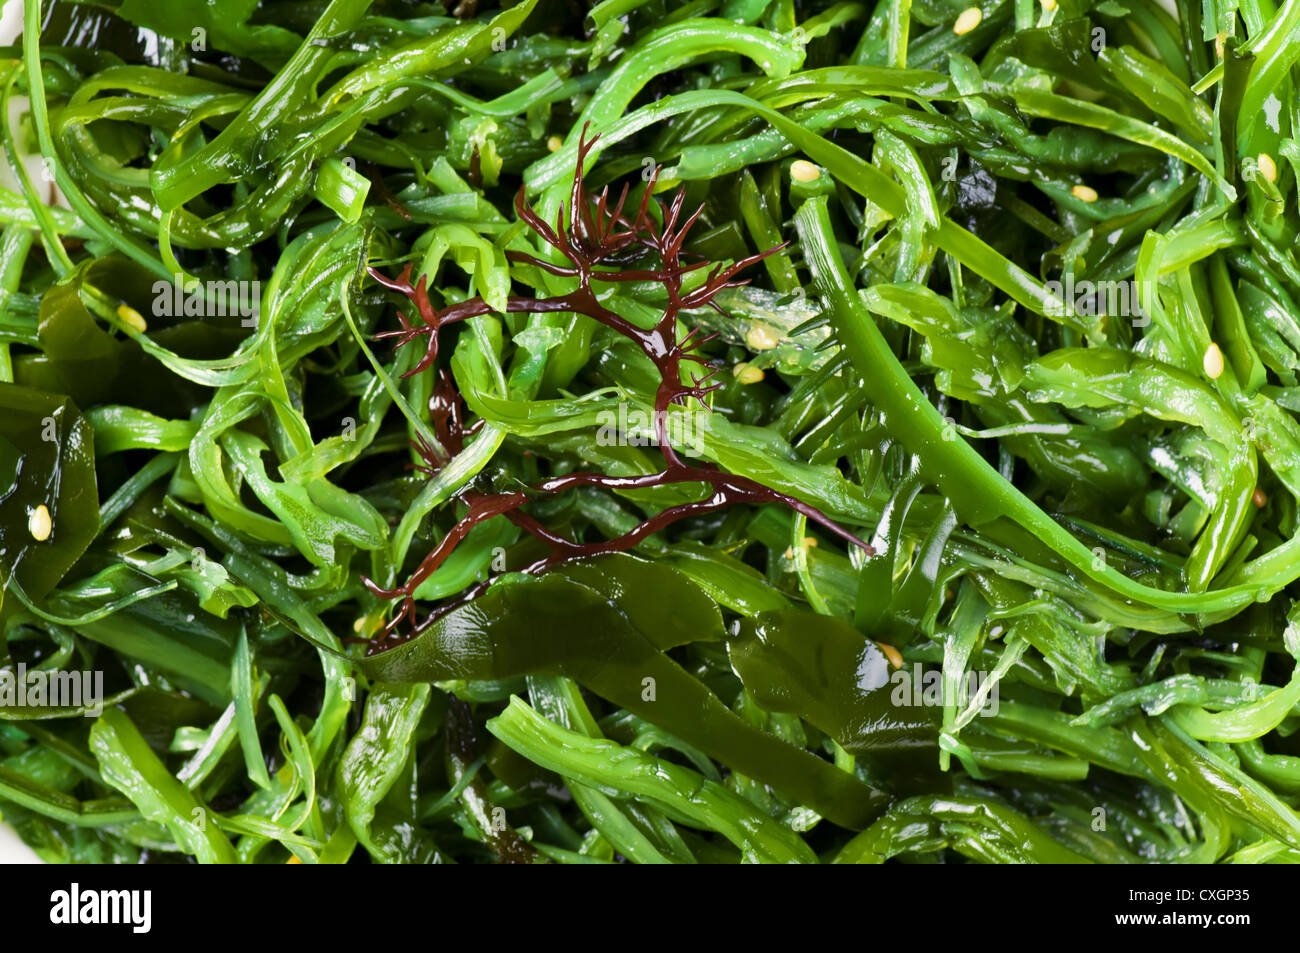 seaweed salad Stock Photo